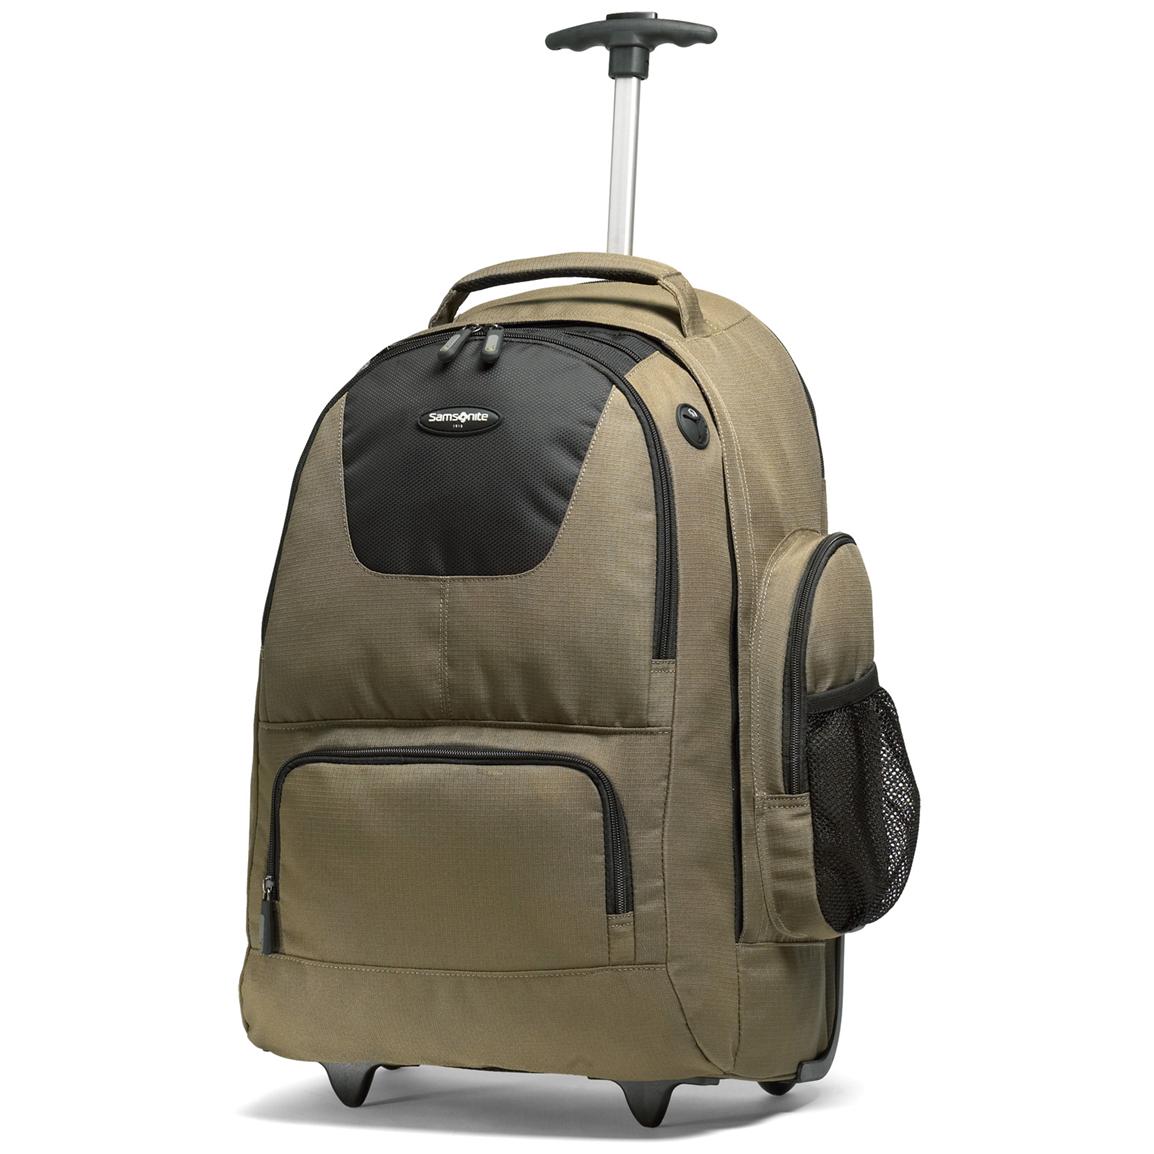 Wheeled Backpack | IUCN Water